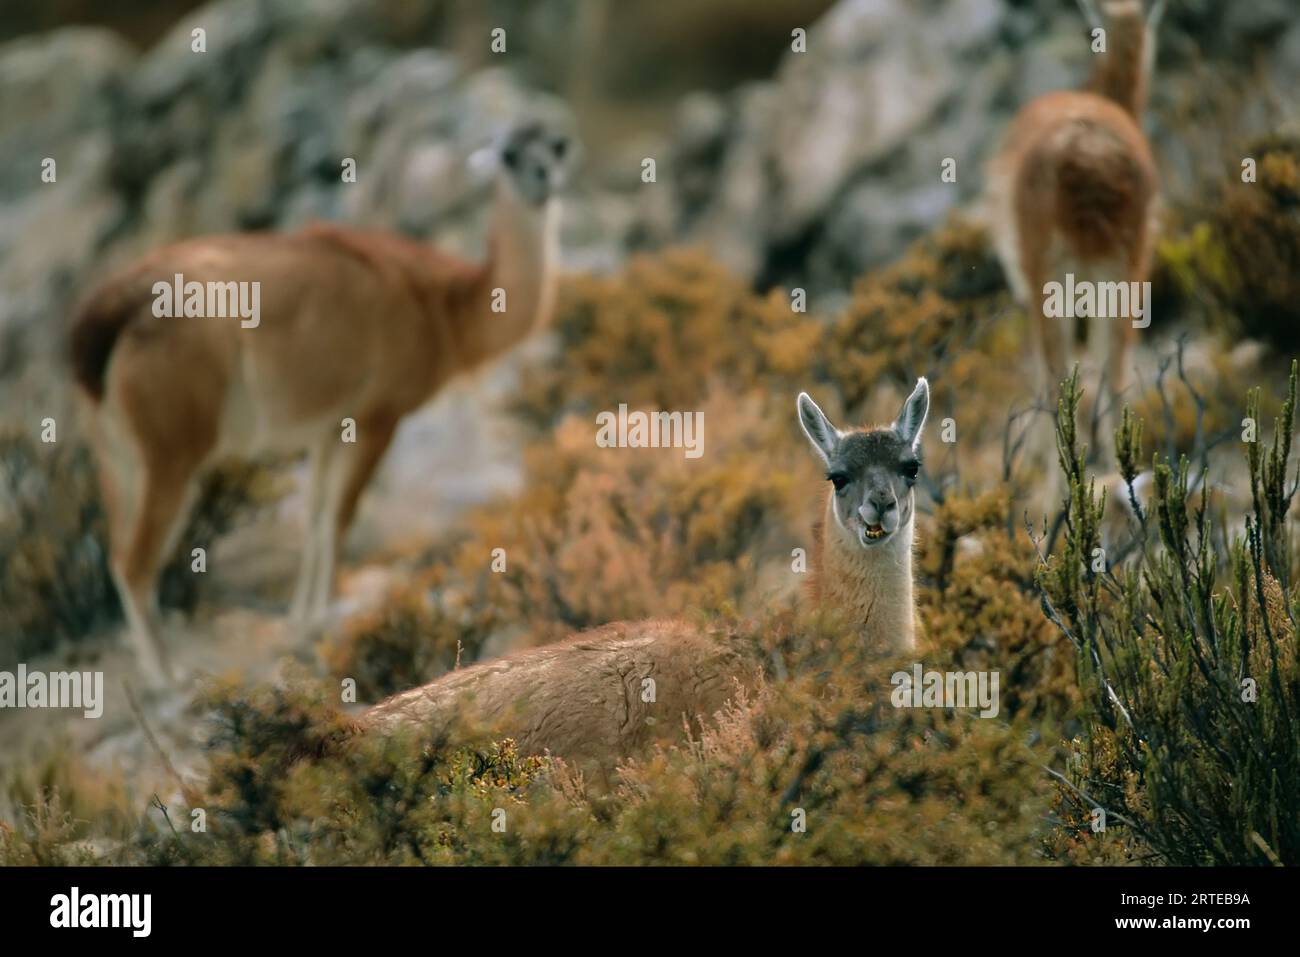 Llamas (Lama glama) grazing on high desert vegetation in the Atacama Desert; Chile Stock Photo